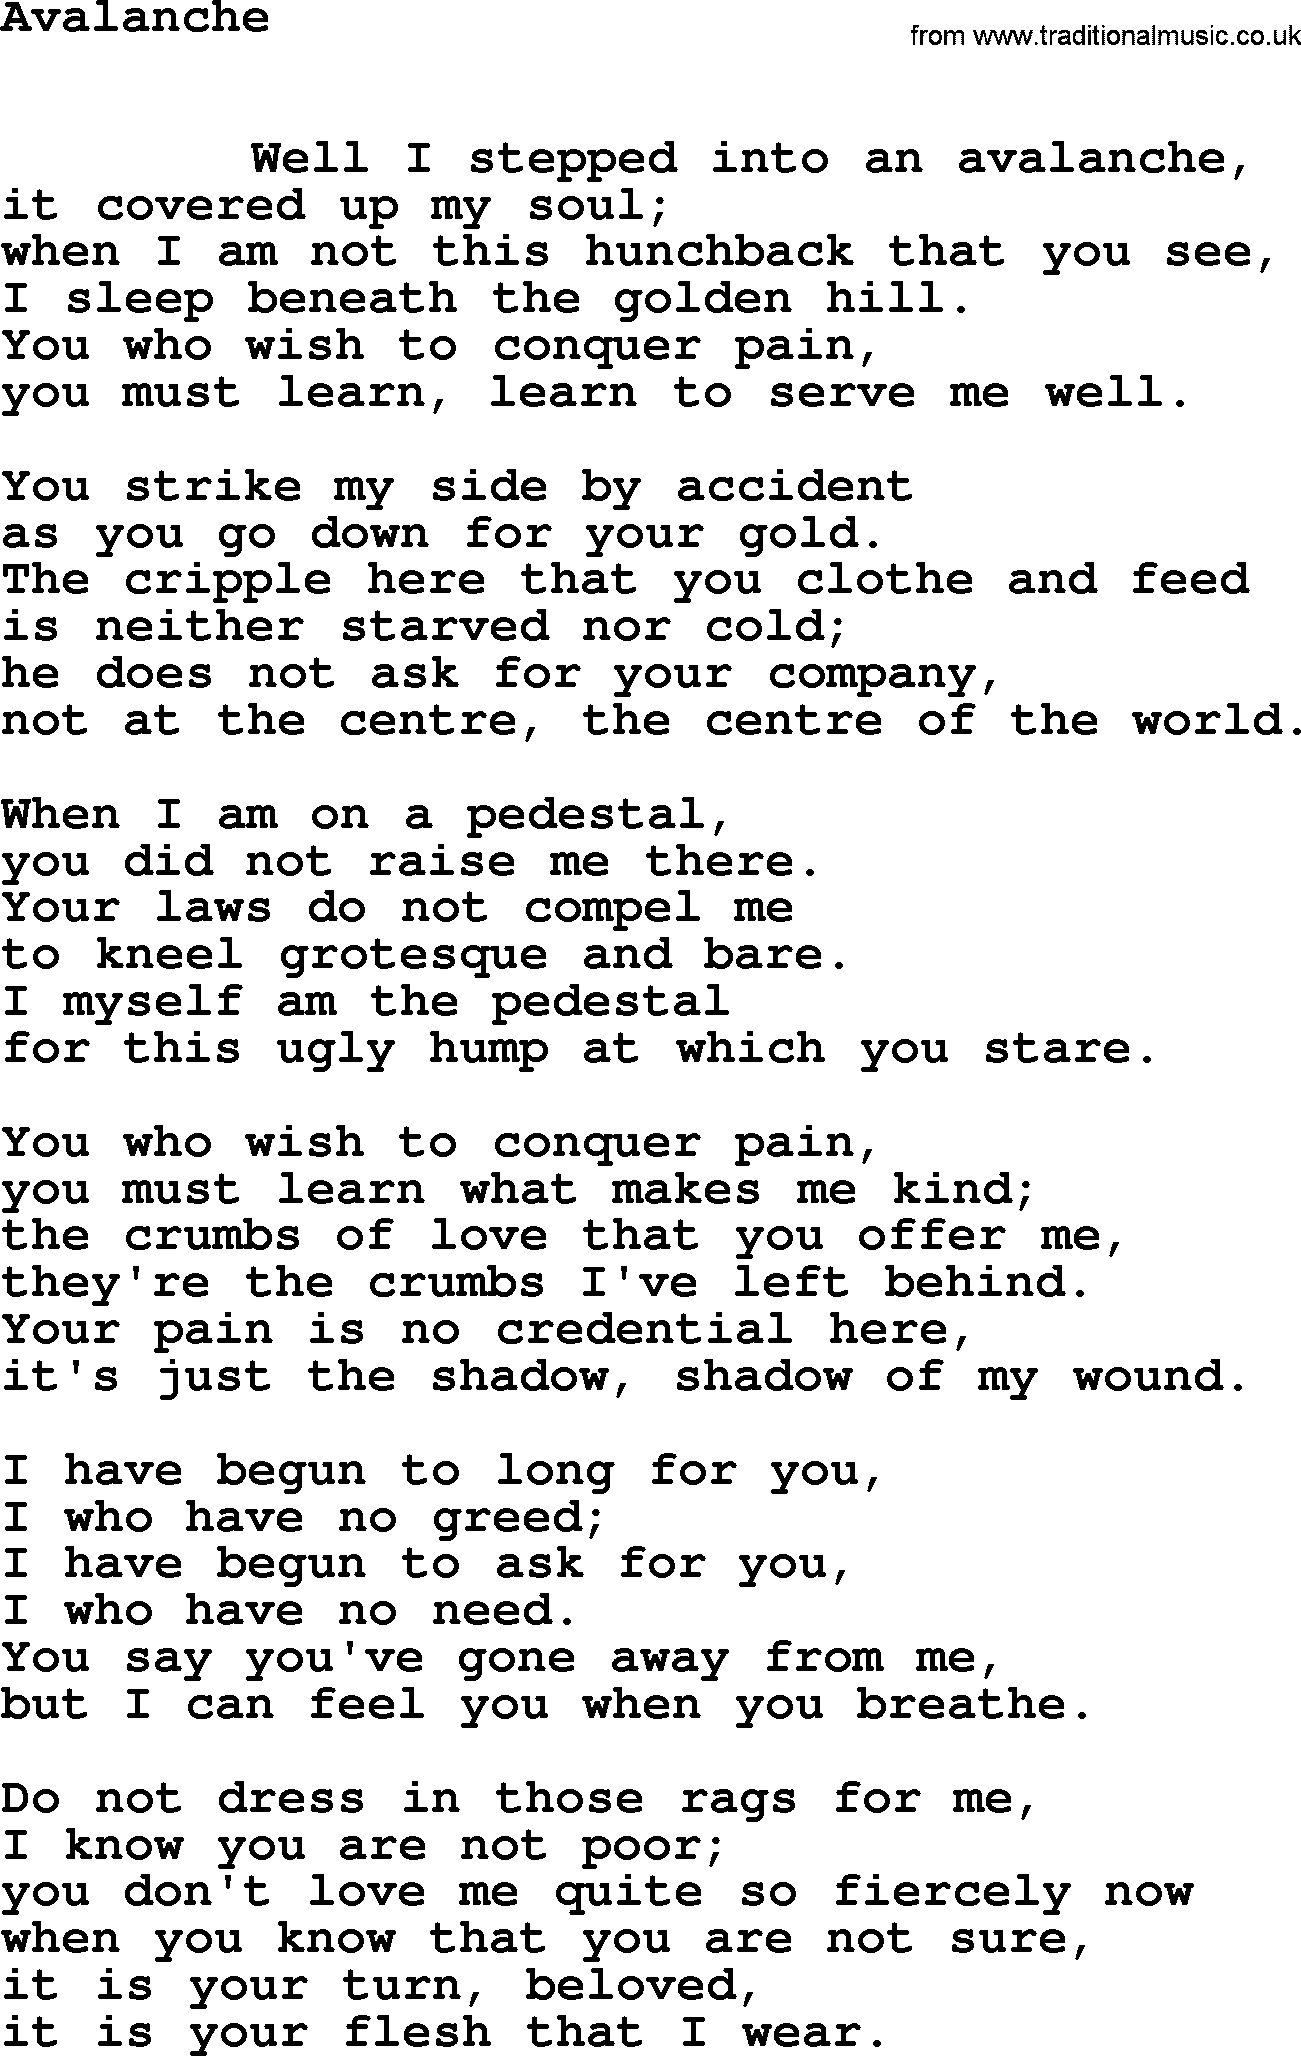 Leonard Cohen song Avalanche-leonard-cohen.txt lyrics